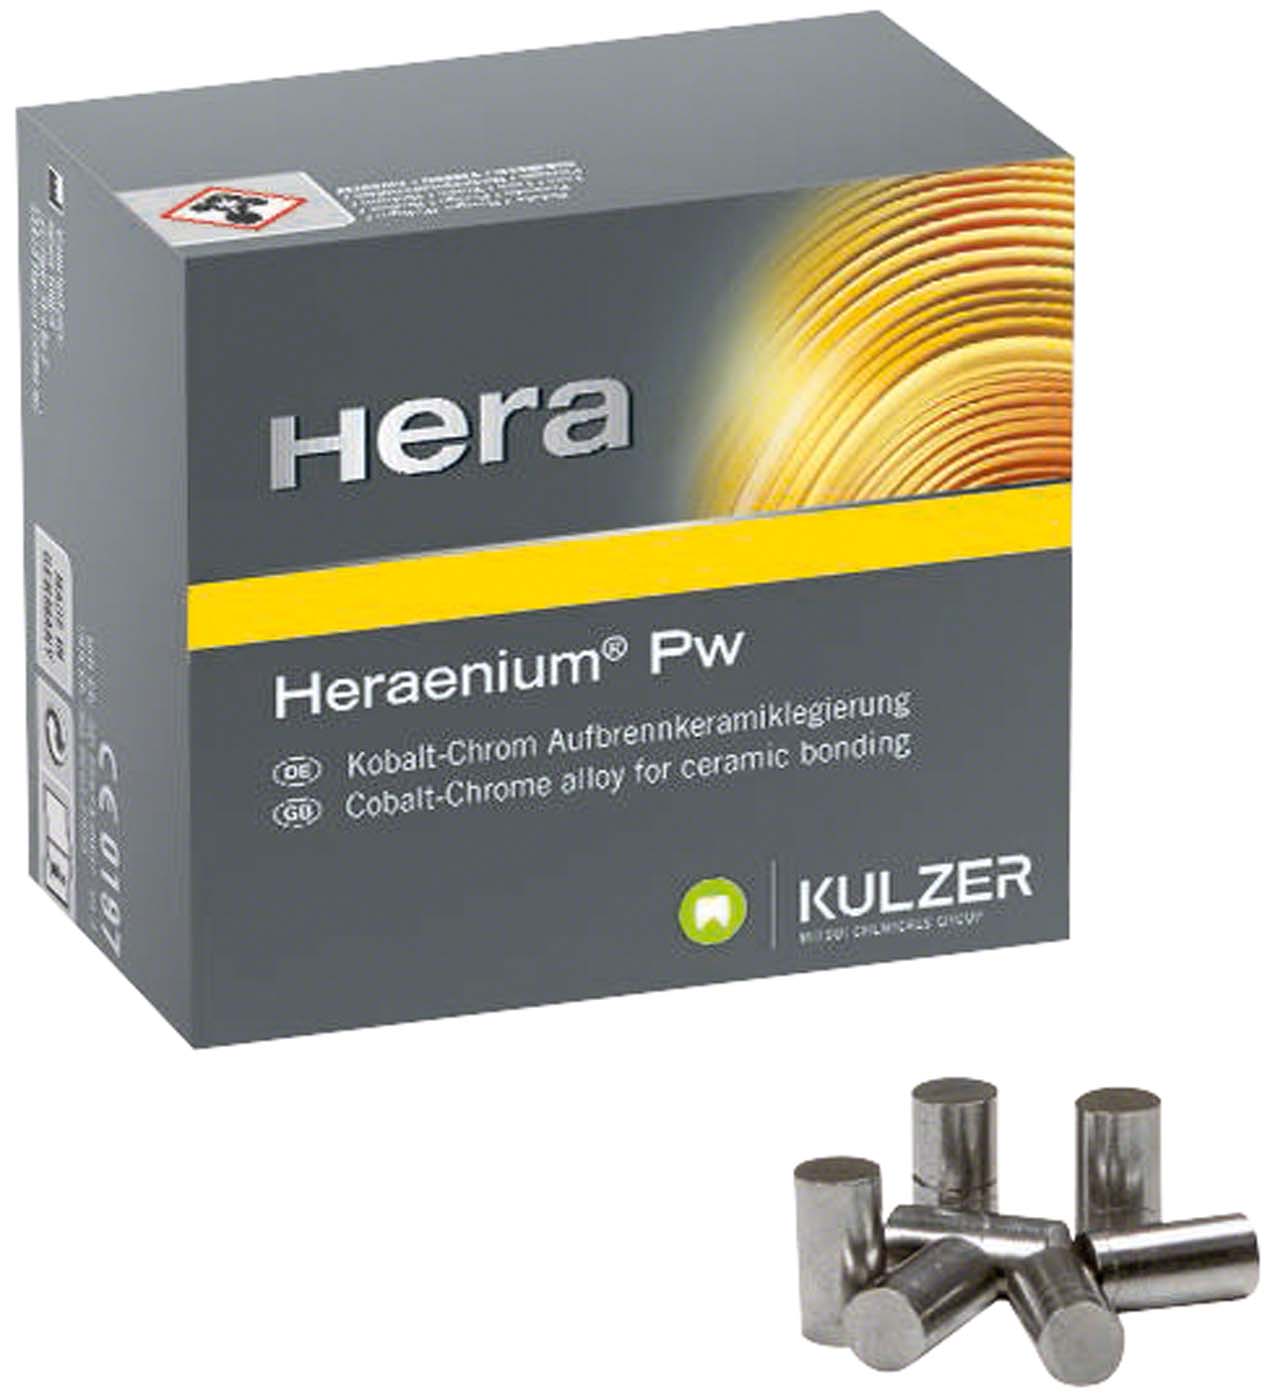 Heraenium® Pw Kulzer